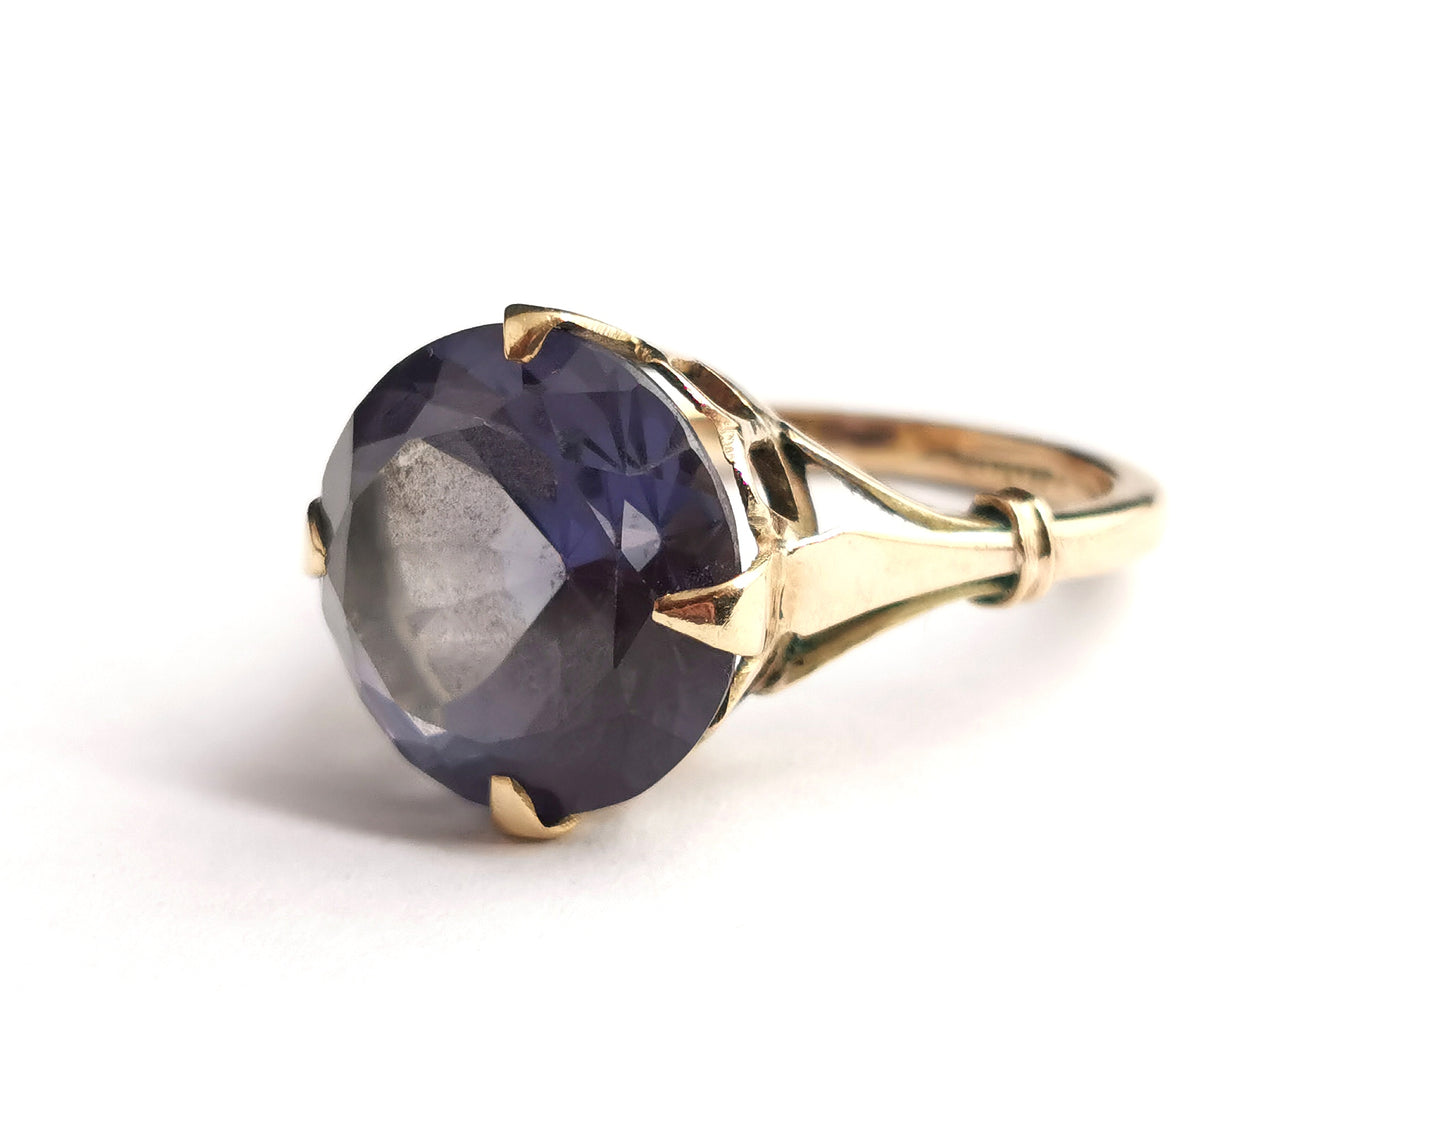 Vintage colour change sapphire cocktail ring, 9ct gold, c1940s